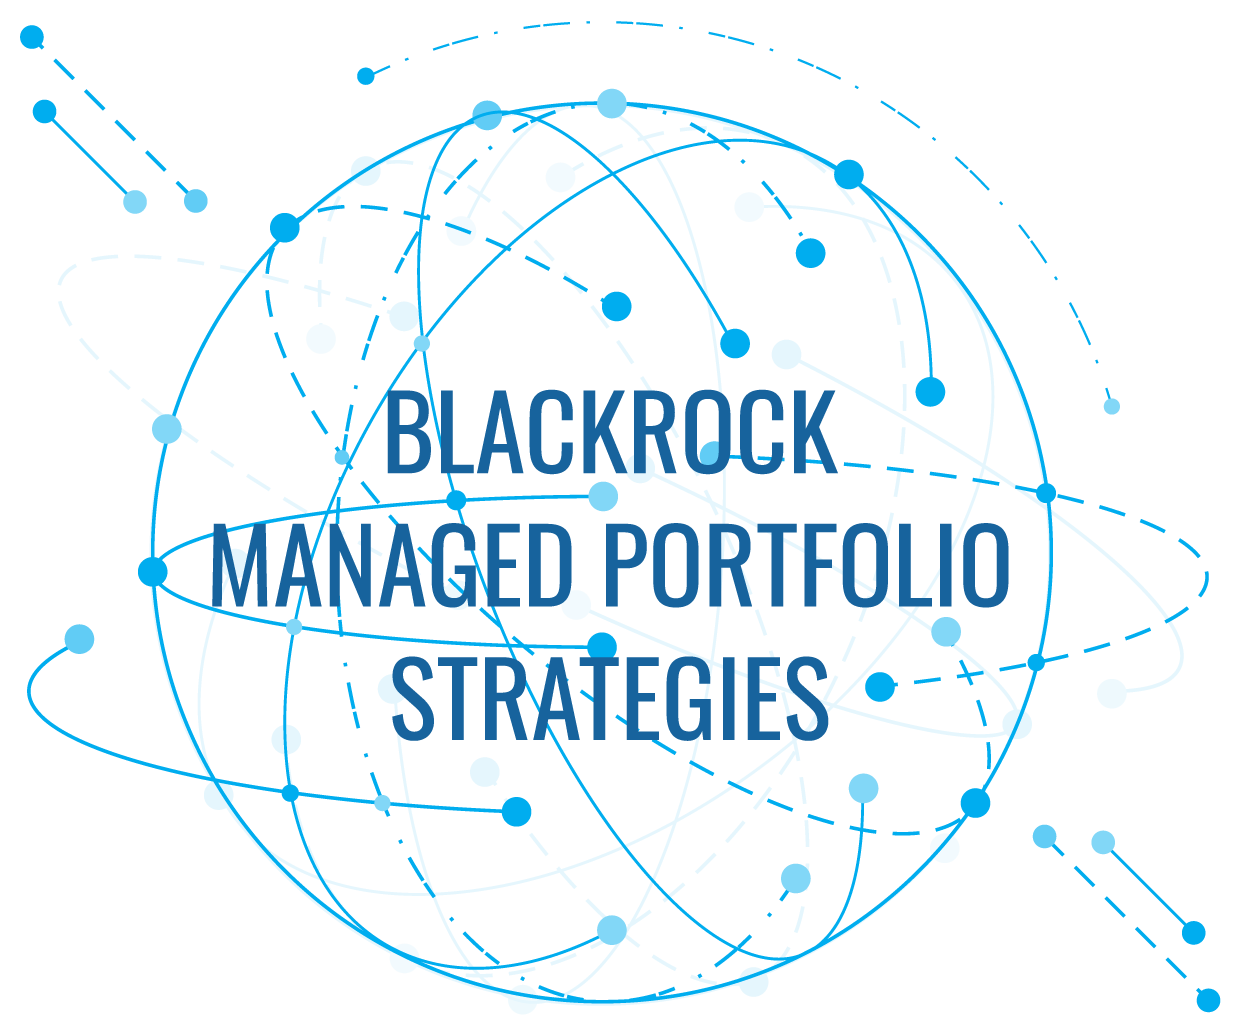 BlackRock Managed Portfolio Strategies